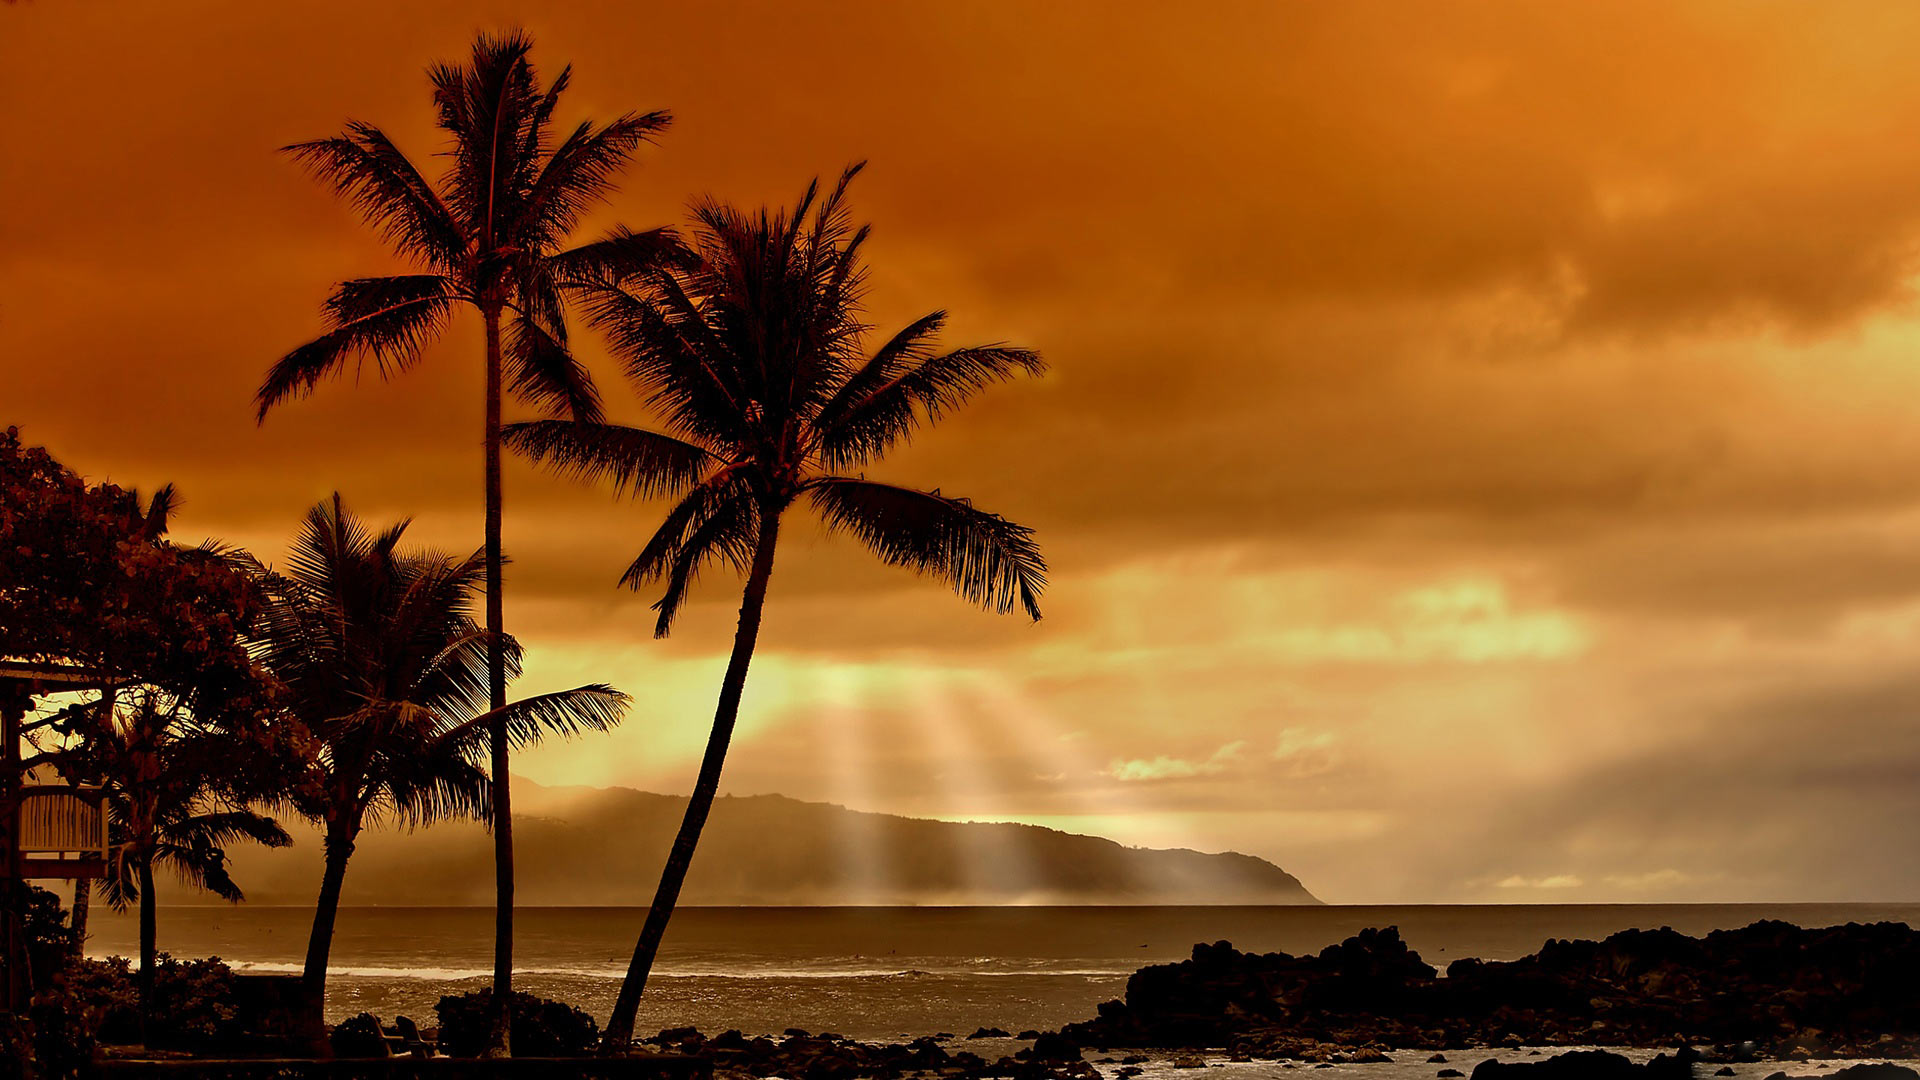 Desktop Wallpaper · Gallery · Nature · Hawaiian sunset | Free ...